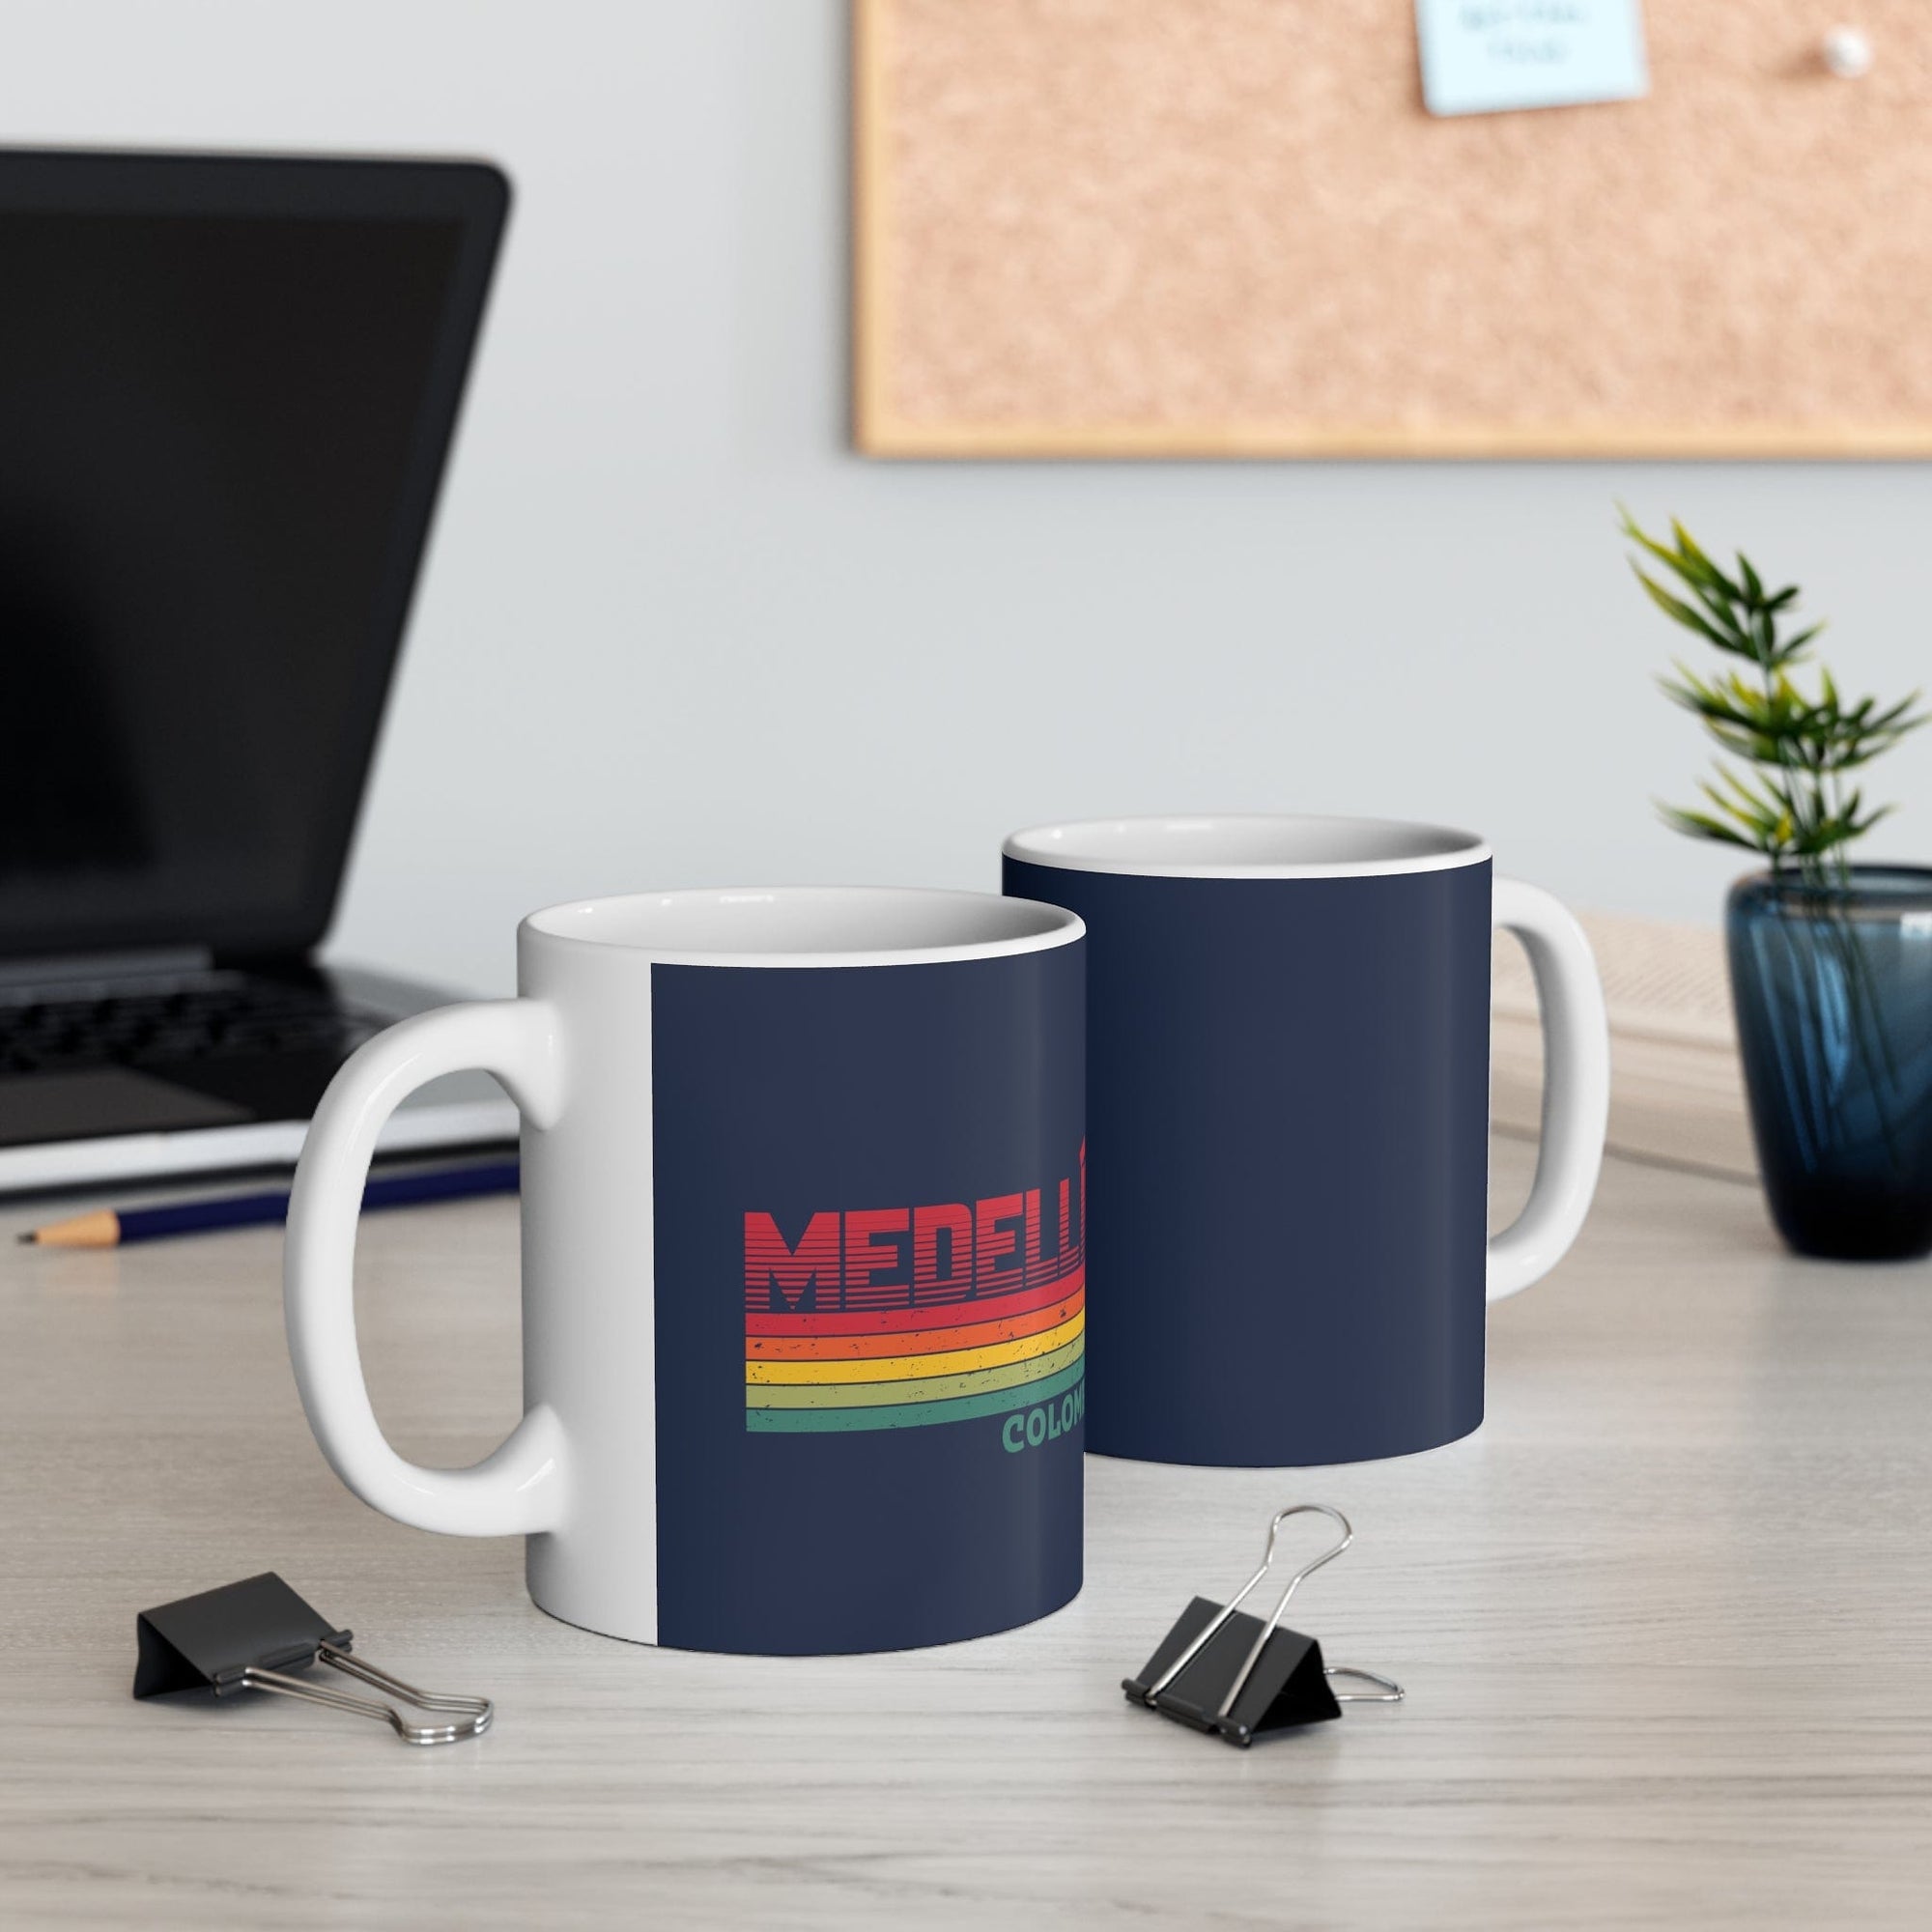 MEDELLIN - Awesome Ceramic Mug, Exclusive Design